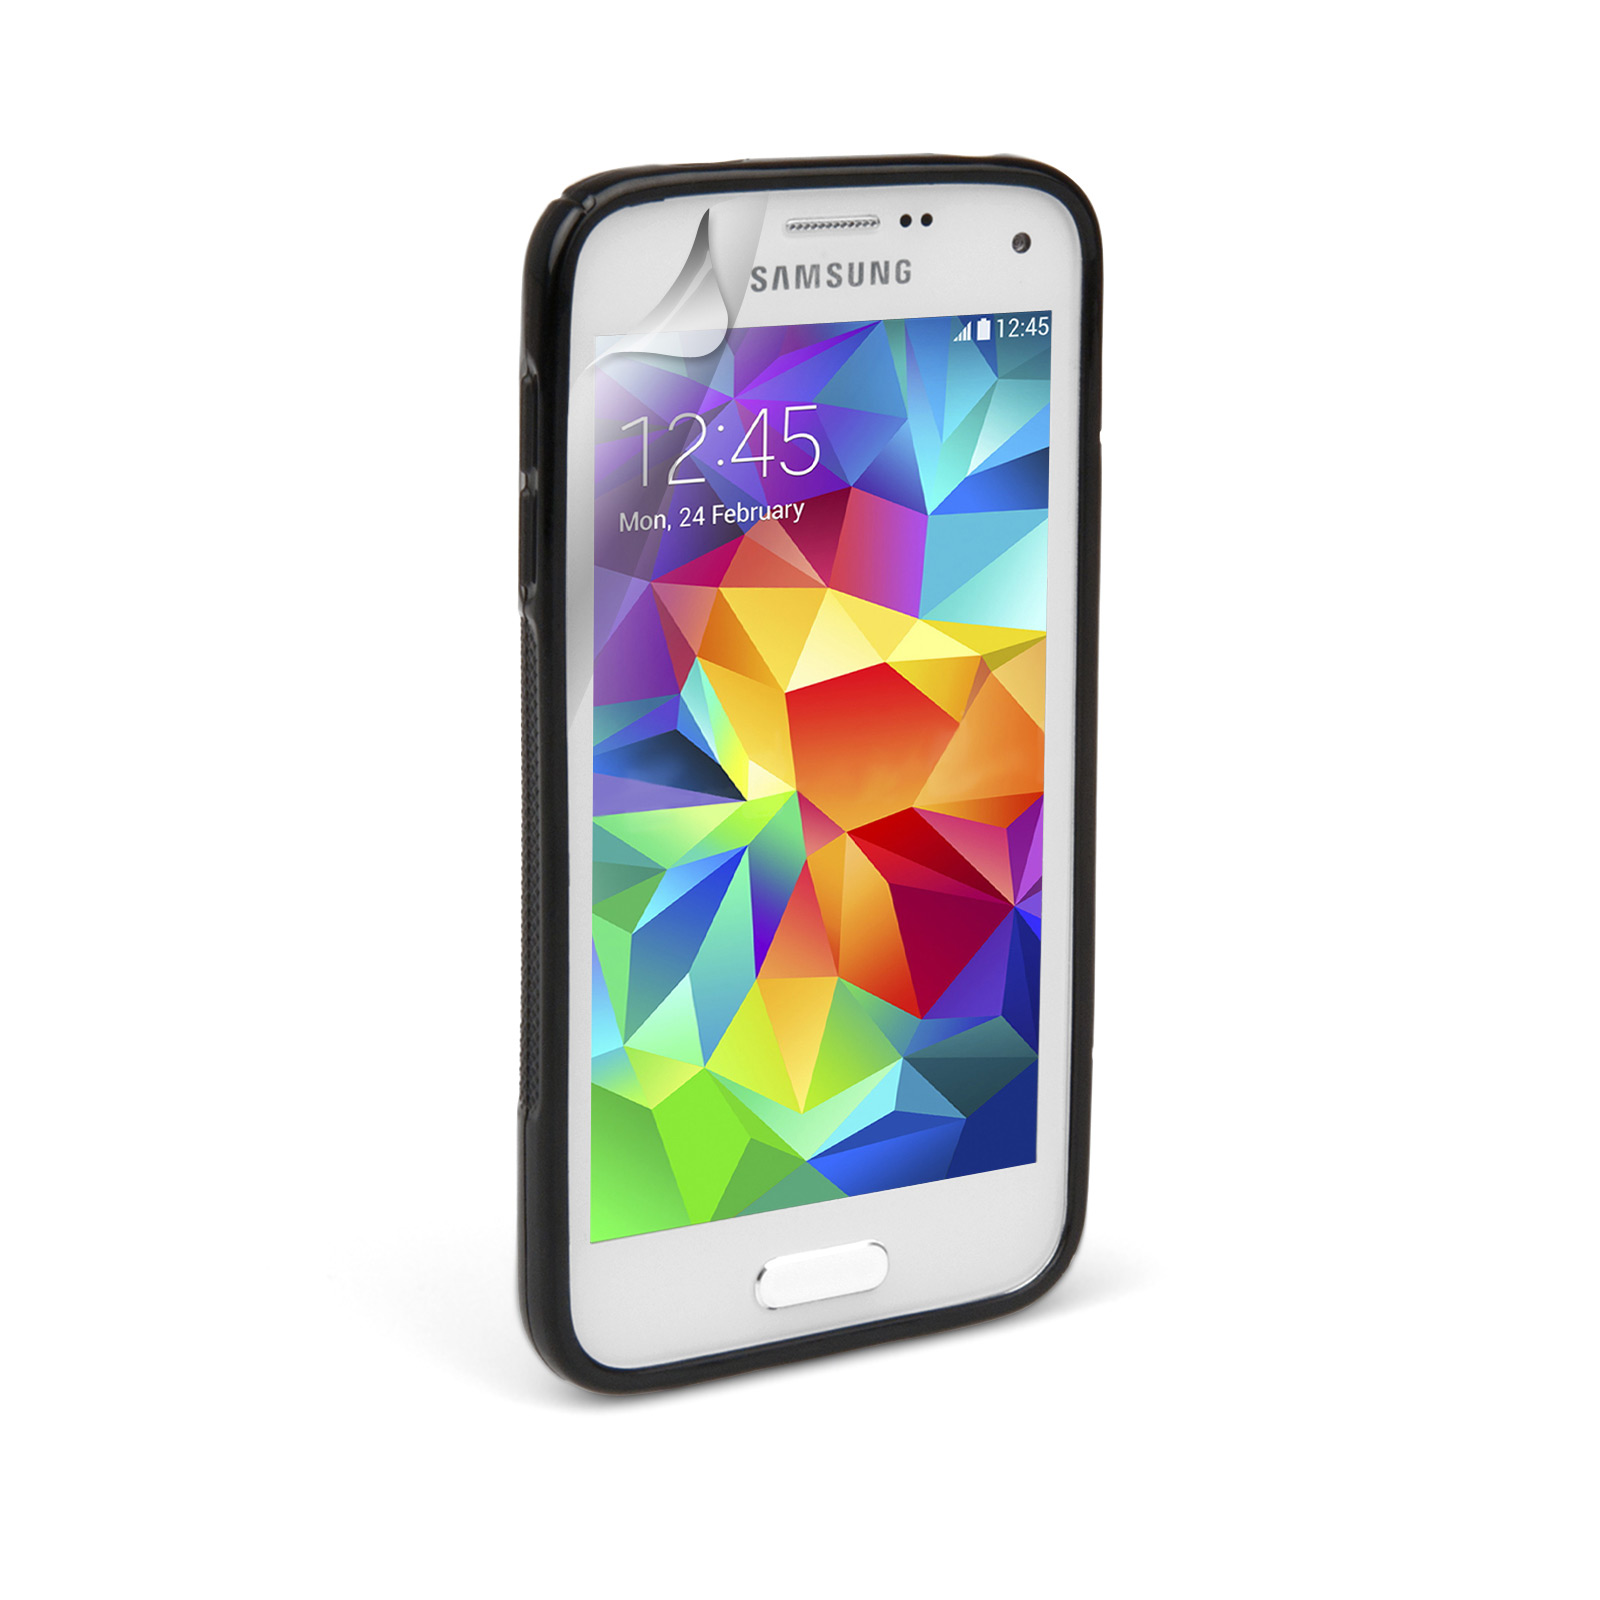 Caseflex Samsung Galaxy S5 Mini Silicone Gel S-Line Case - Black